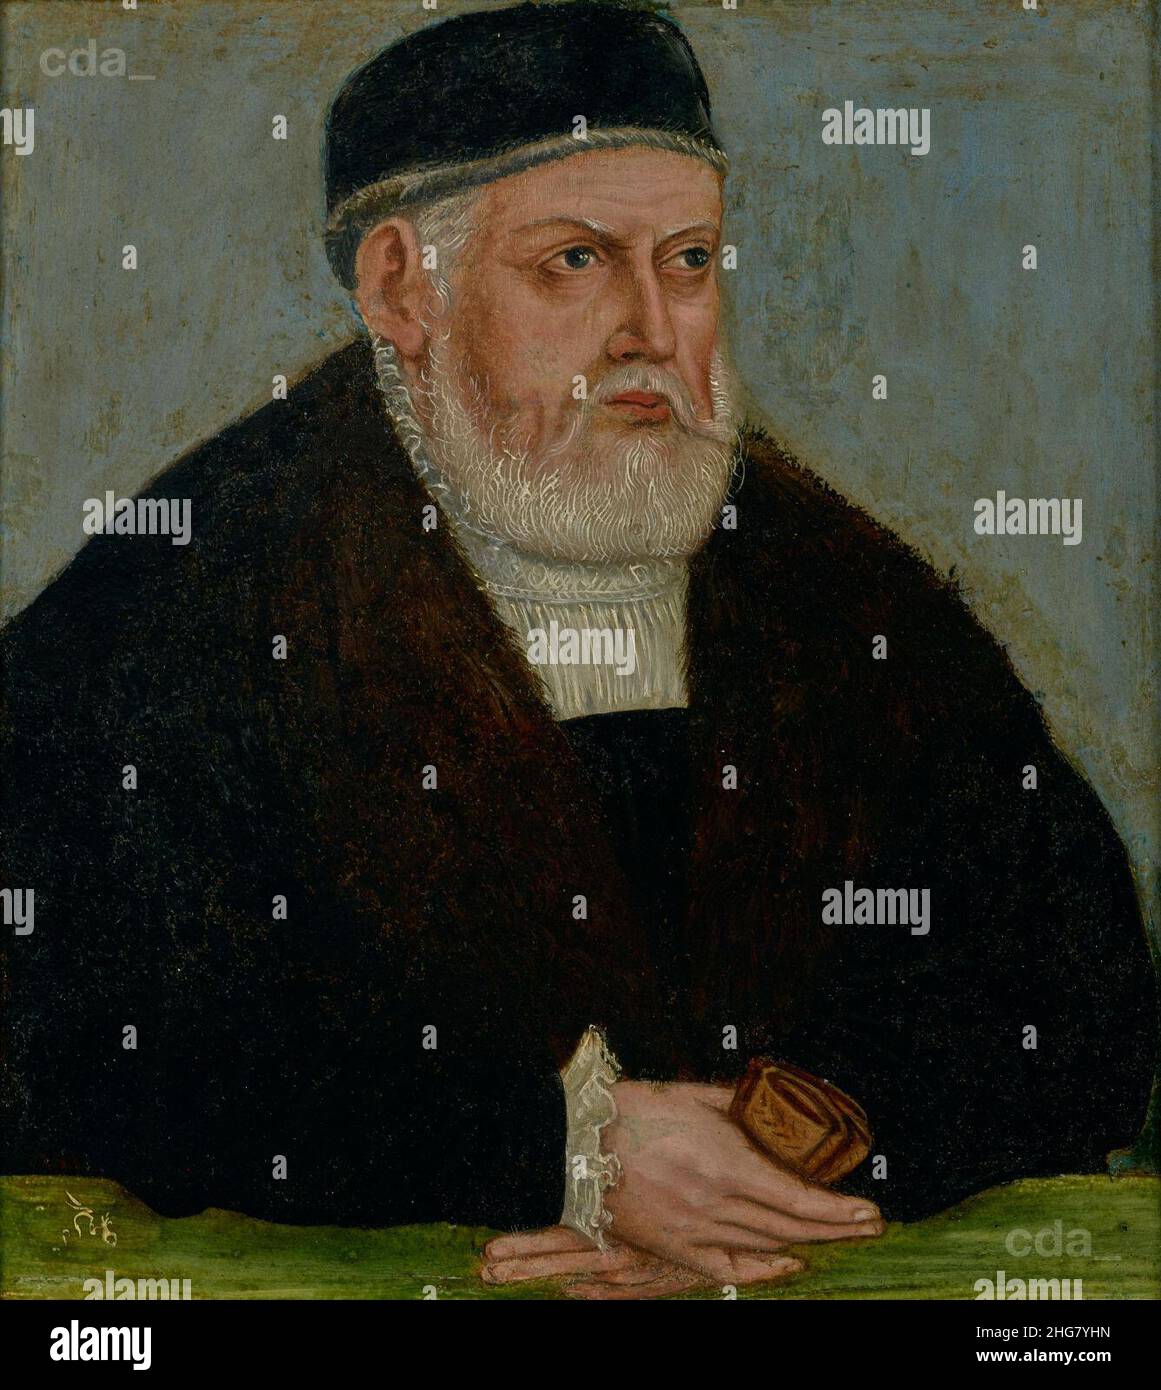 Sigismund I The Old, roi de Pologne (Zygmunt I. Stary) (PL MNK XII-536 2017 dans l'ensemble). Banque D'Images